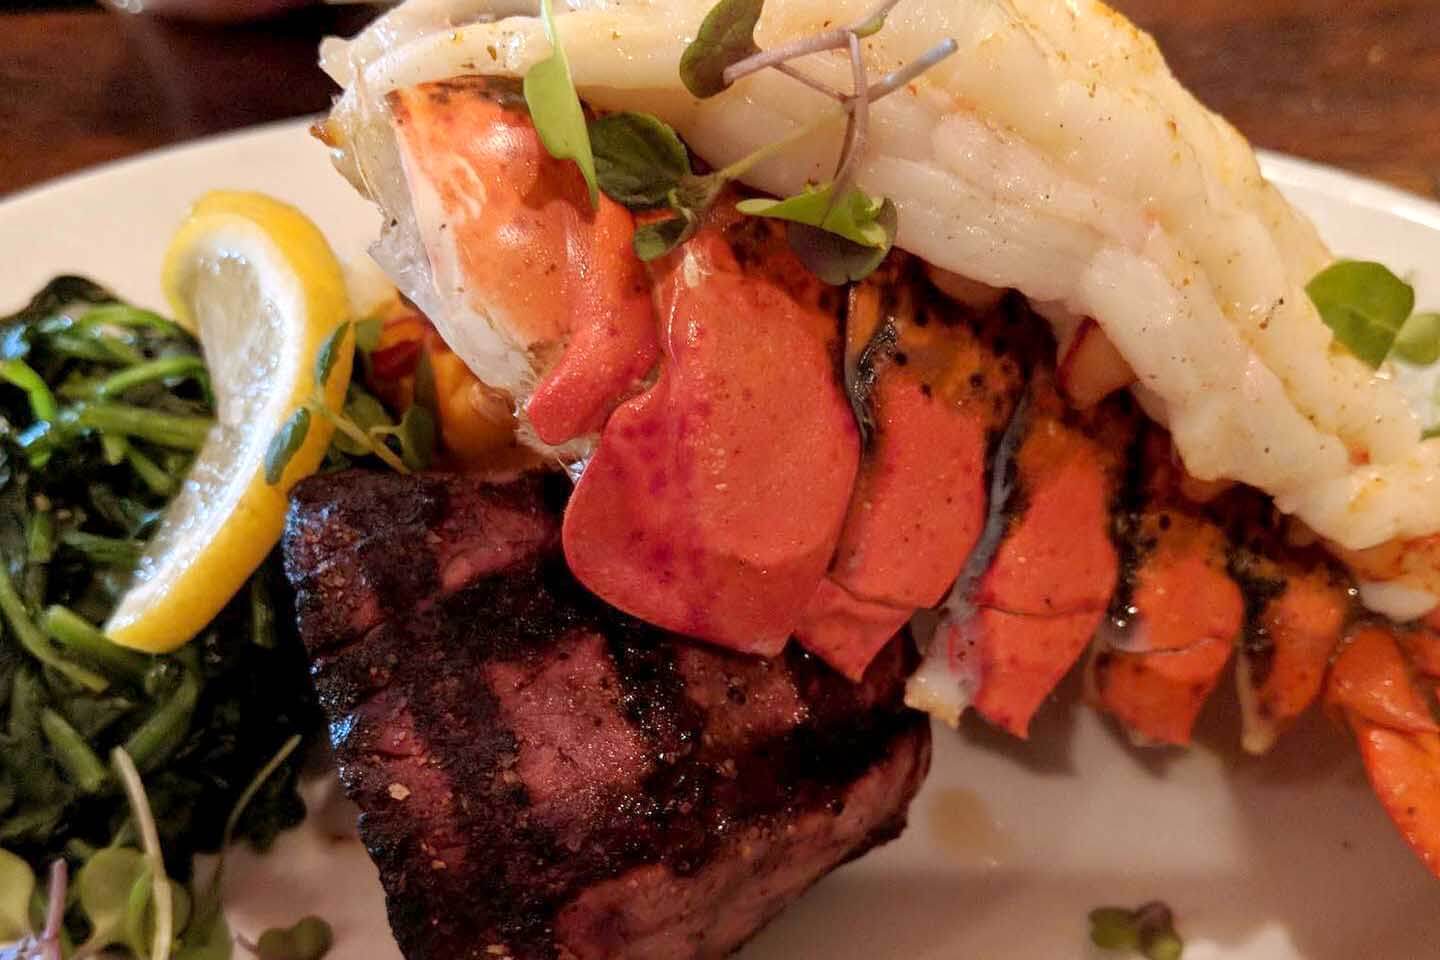 Turners Restaurant lobster and steak